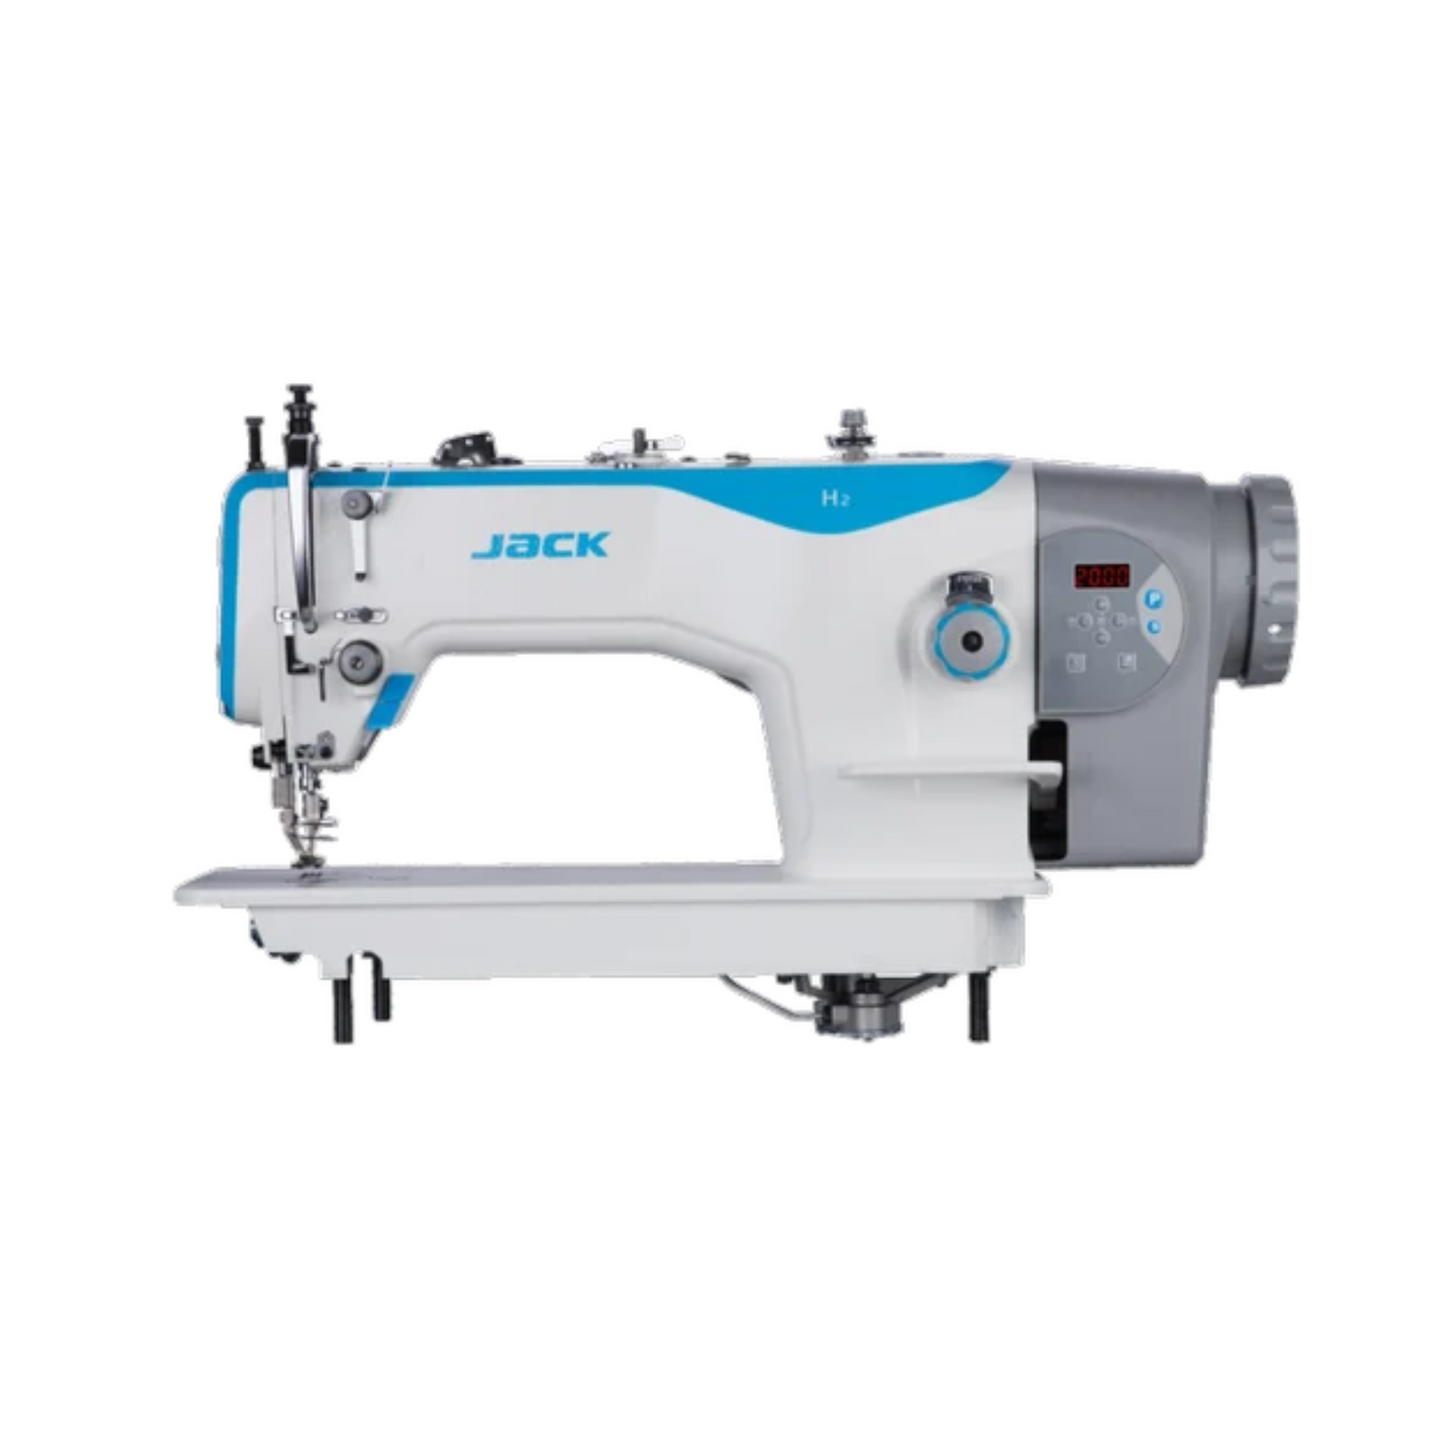 Jack H2 heavy duty machine - Sewing machine - White - Front view